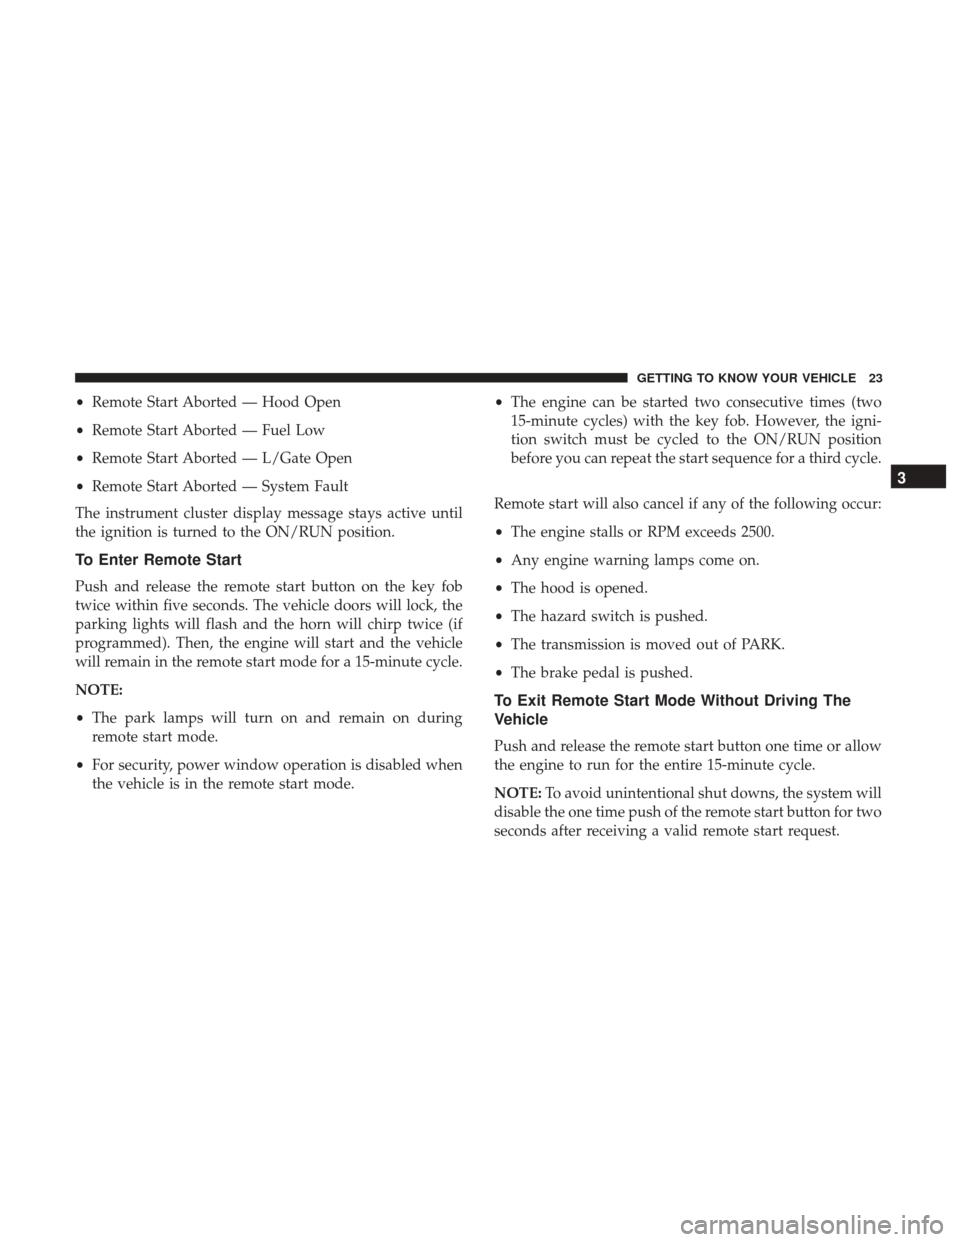 JEEP WRANGLER 2017 JK / 3.G Owners Manual •Remote Start Aborted — Hood Open
• Remote Start Aborted — Fuel Low
• Remote Start Aborted — L/Gate Open
• Remote Start Aborted — System Fault
The instrument cluster display message st